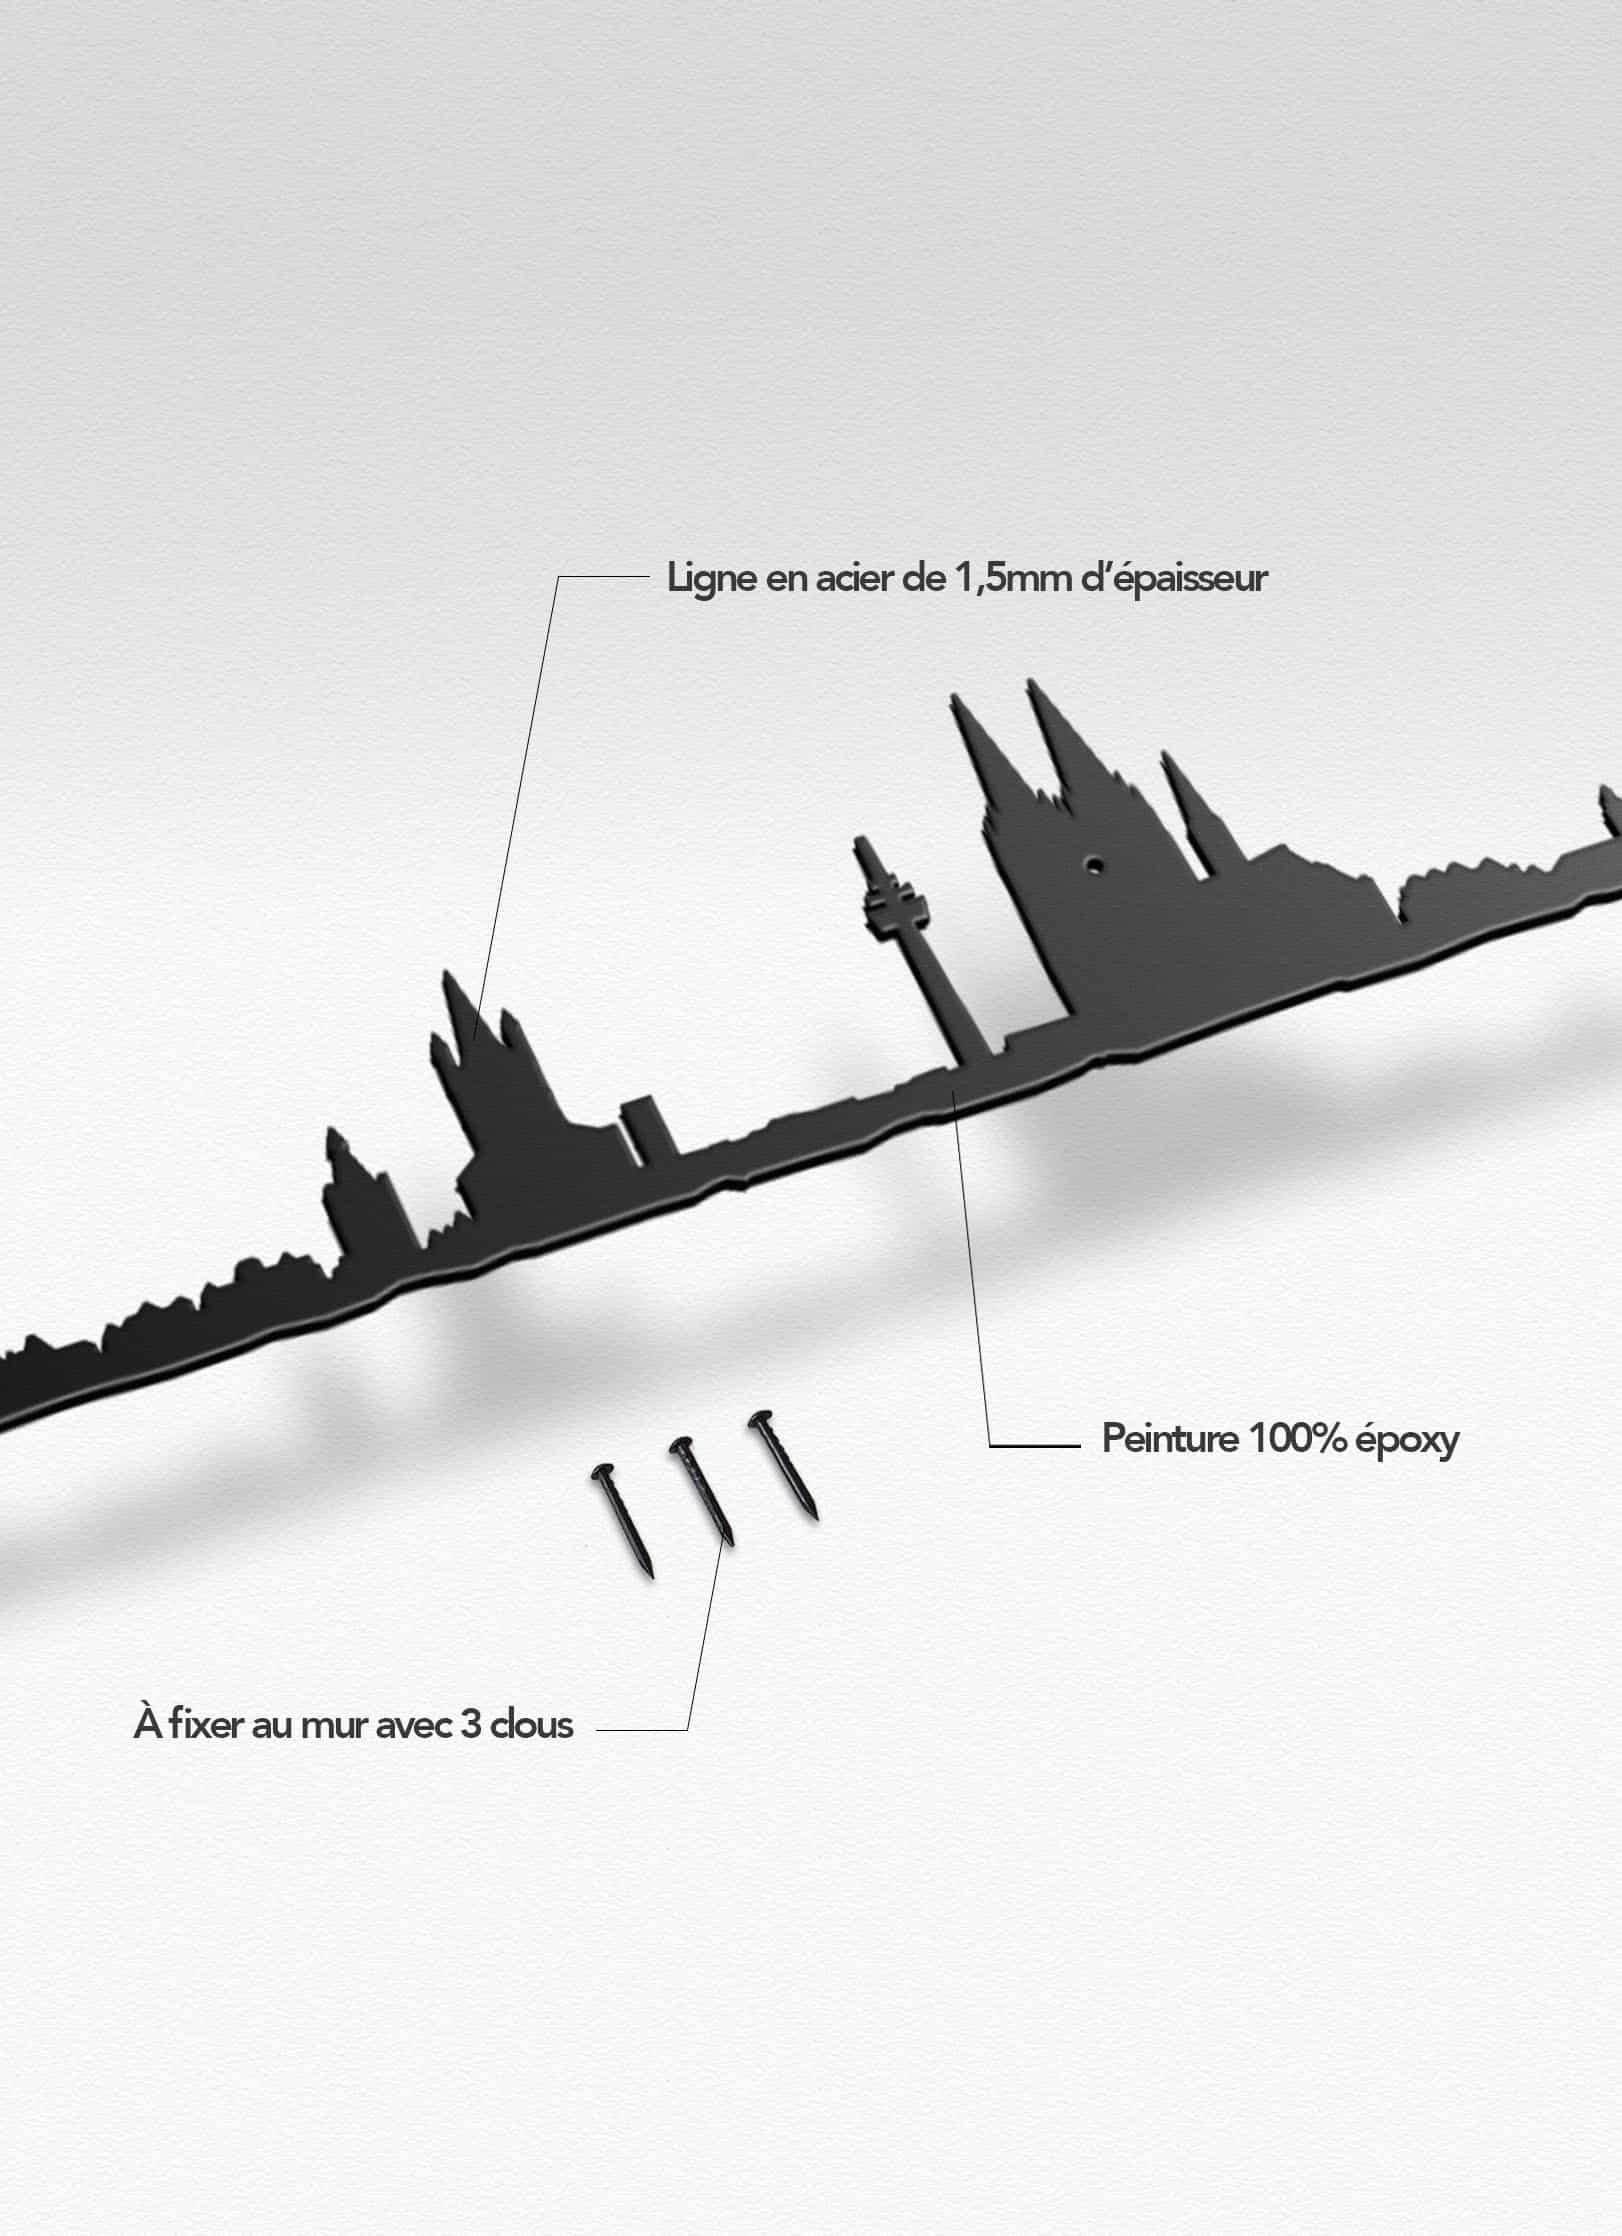 Presentation of the skyline of Cologne